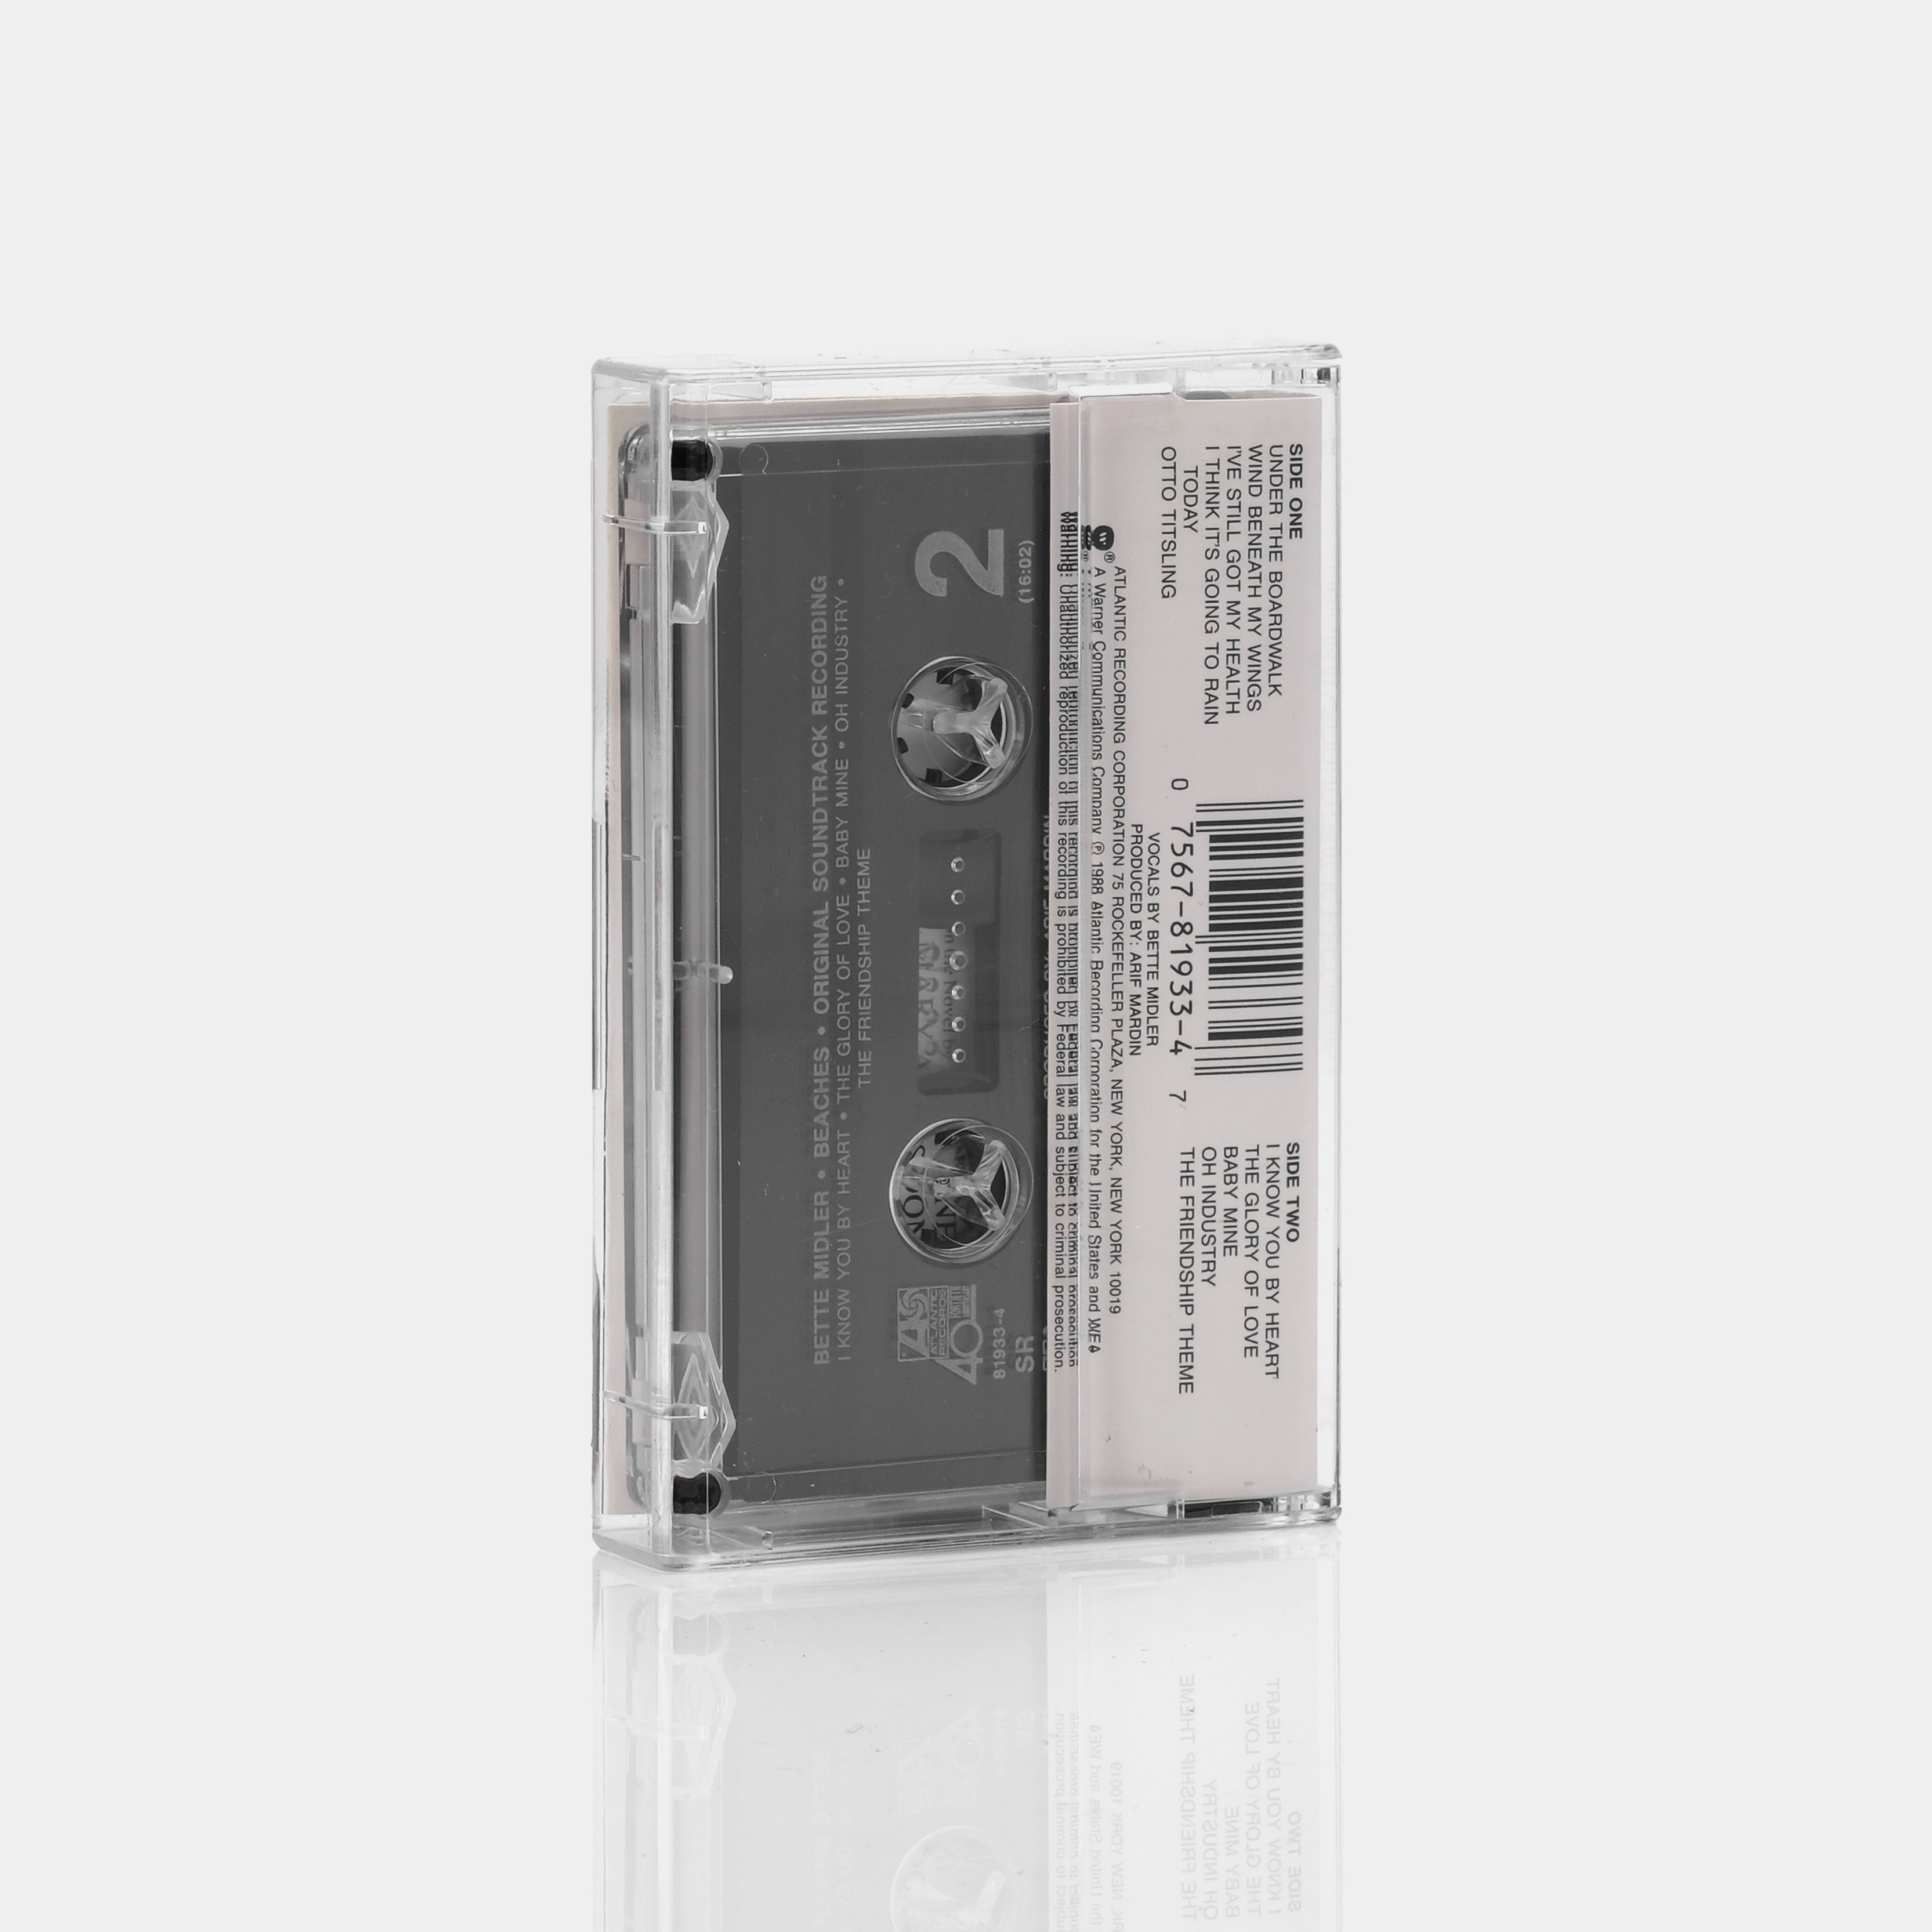 Bette Midler - Beaches (Original Soundtrack Recording) Cassette Tape